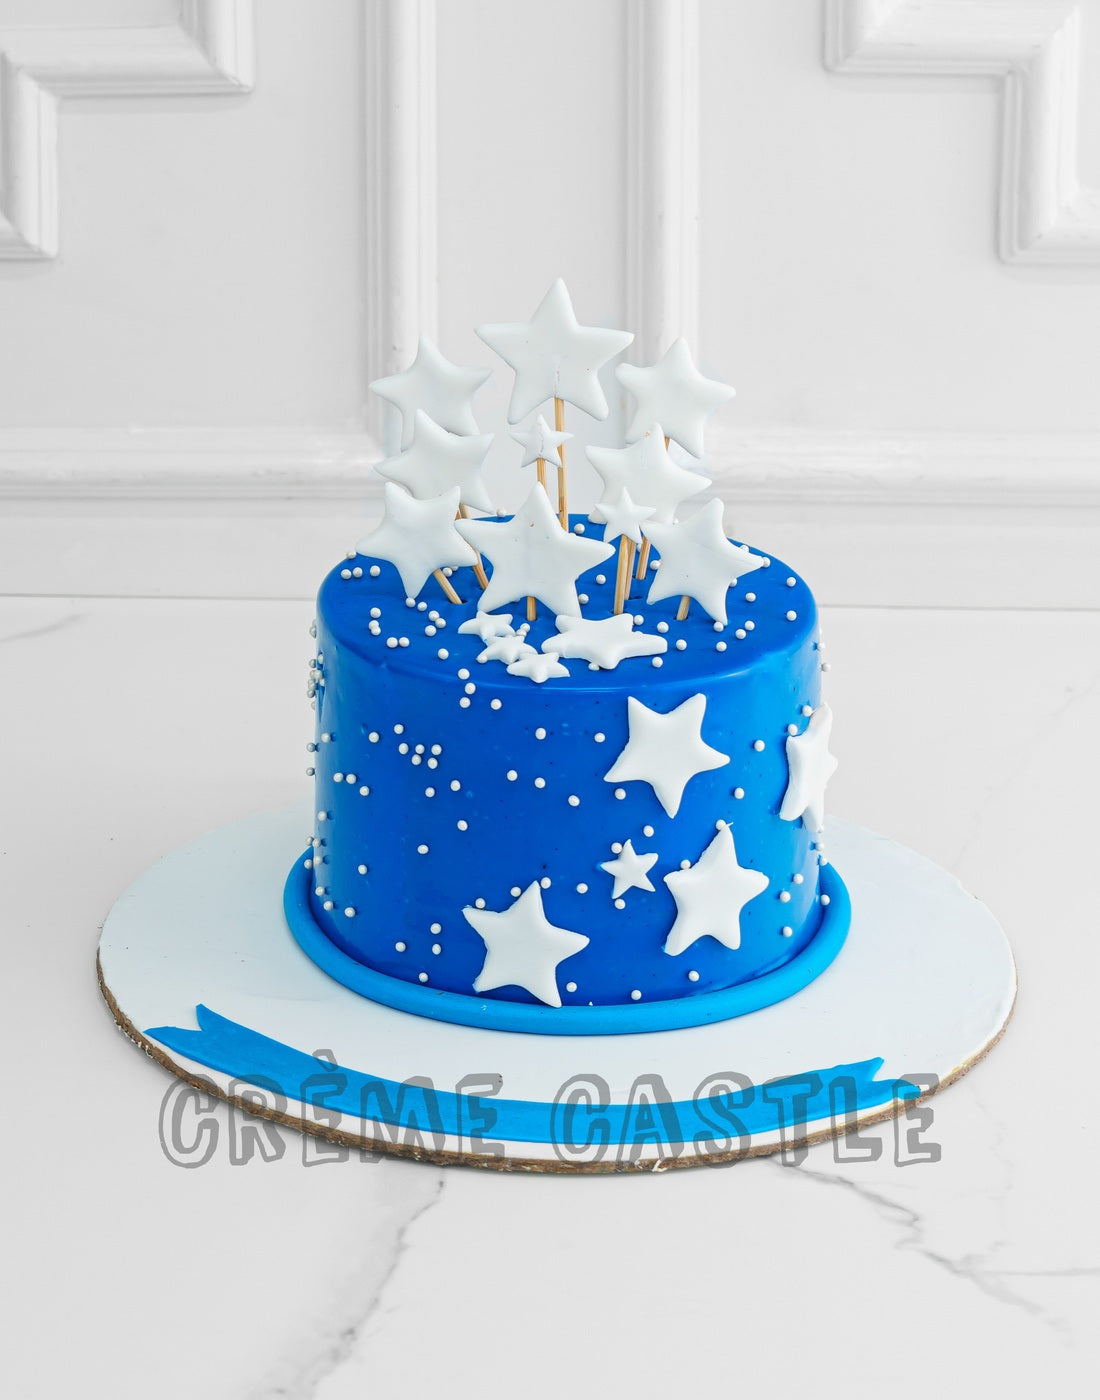 Stars and Night Cake. Cake Designs for Kids. Noida & Gurgaon ...